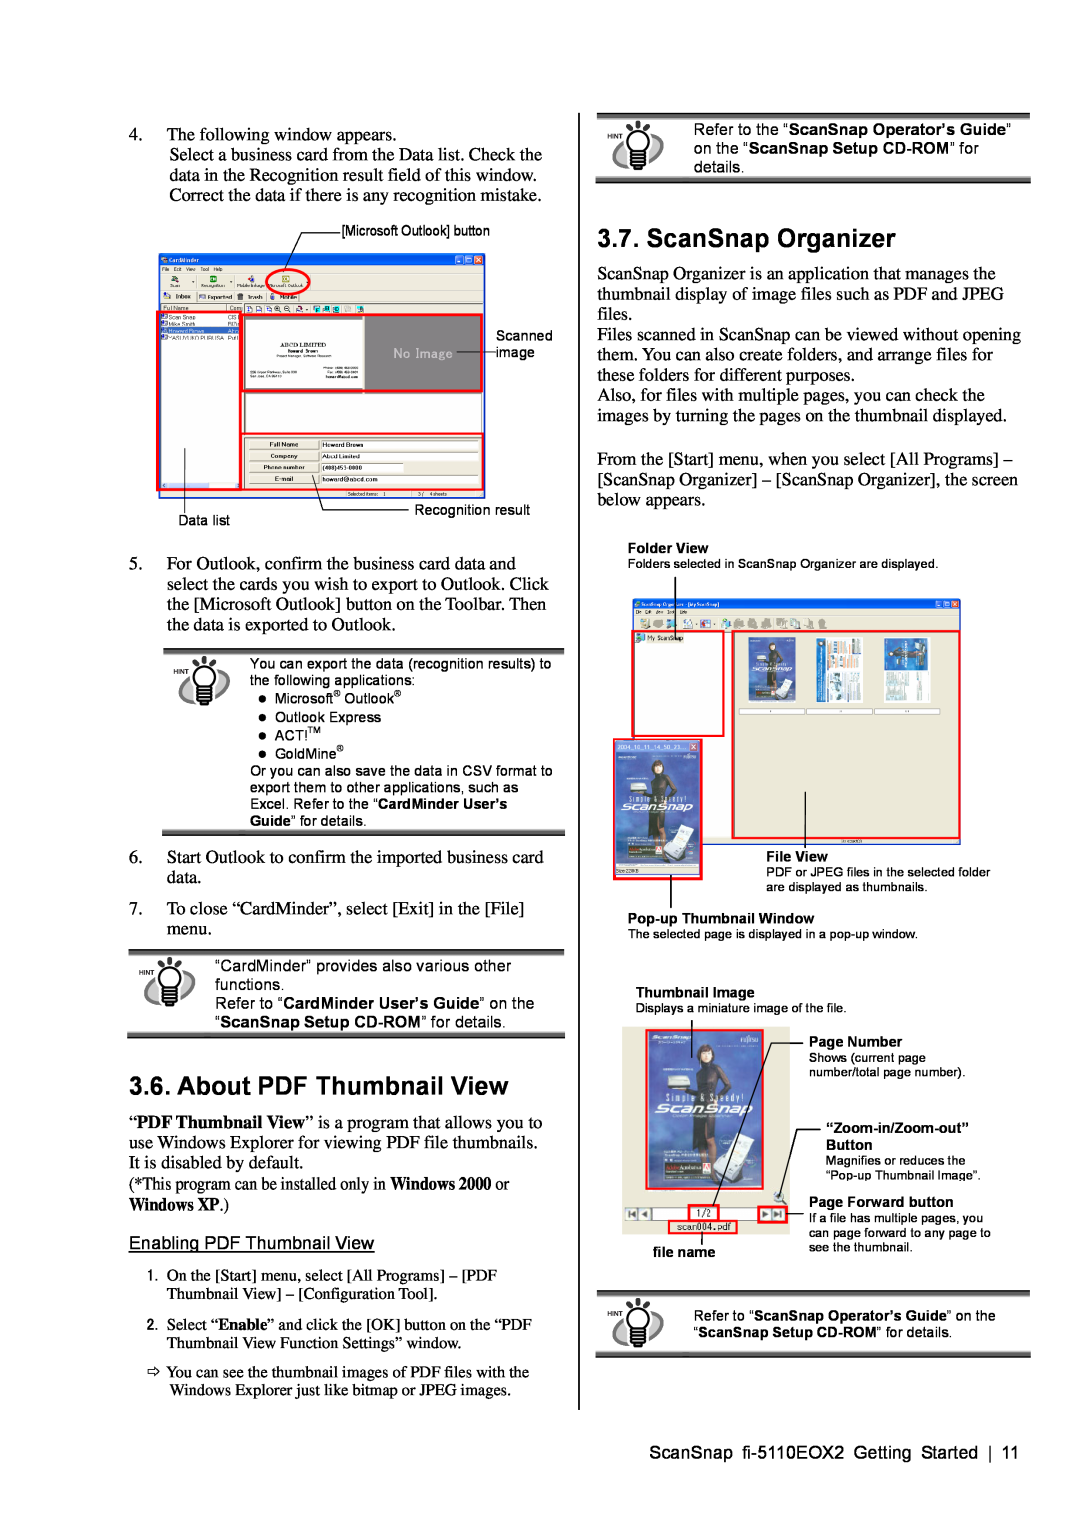 Fujitsu fi-5110EOX2 manual ScanSnap Organizer, About PDF Thumbnail View, Windows XP 